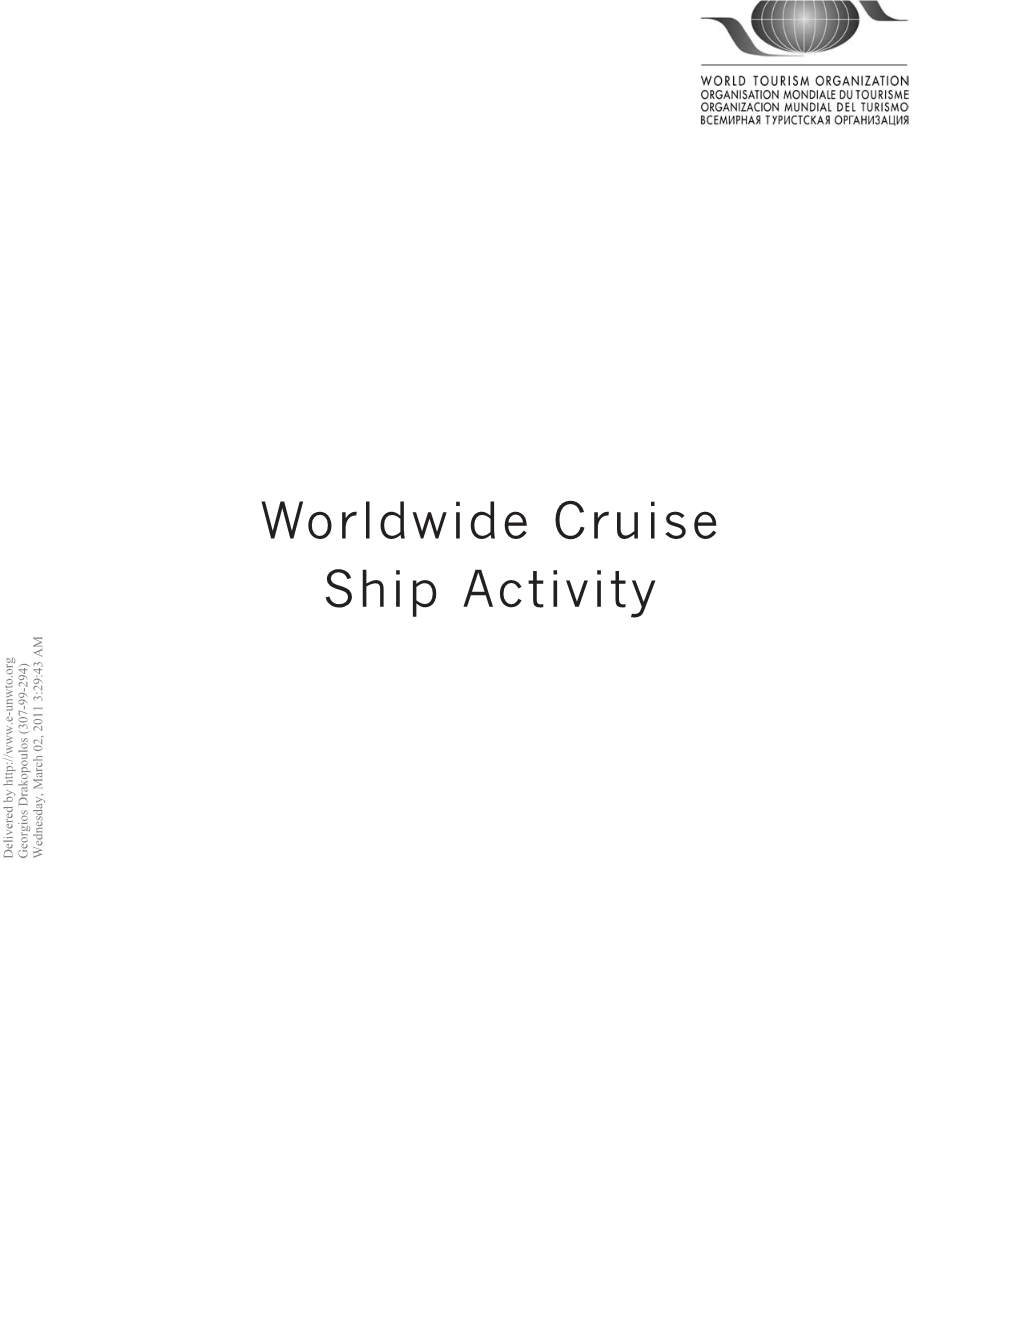 Worldwide Cruise Ship Activity